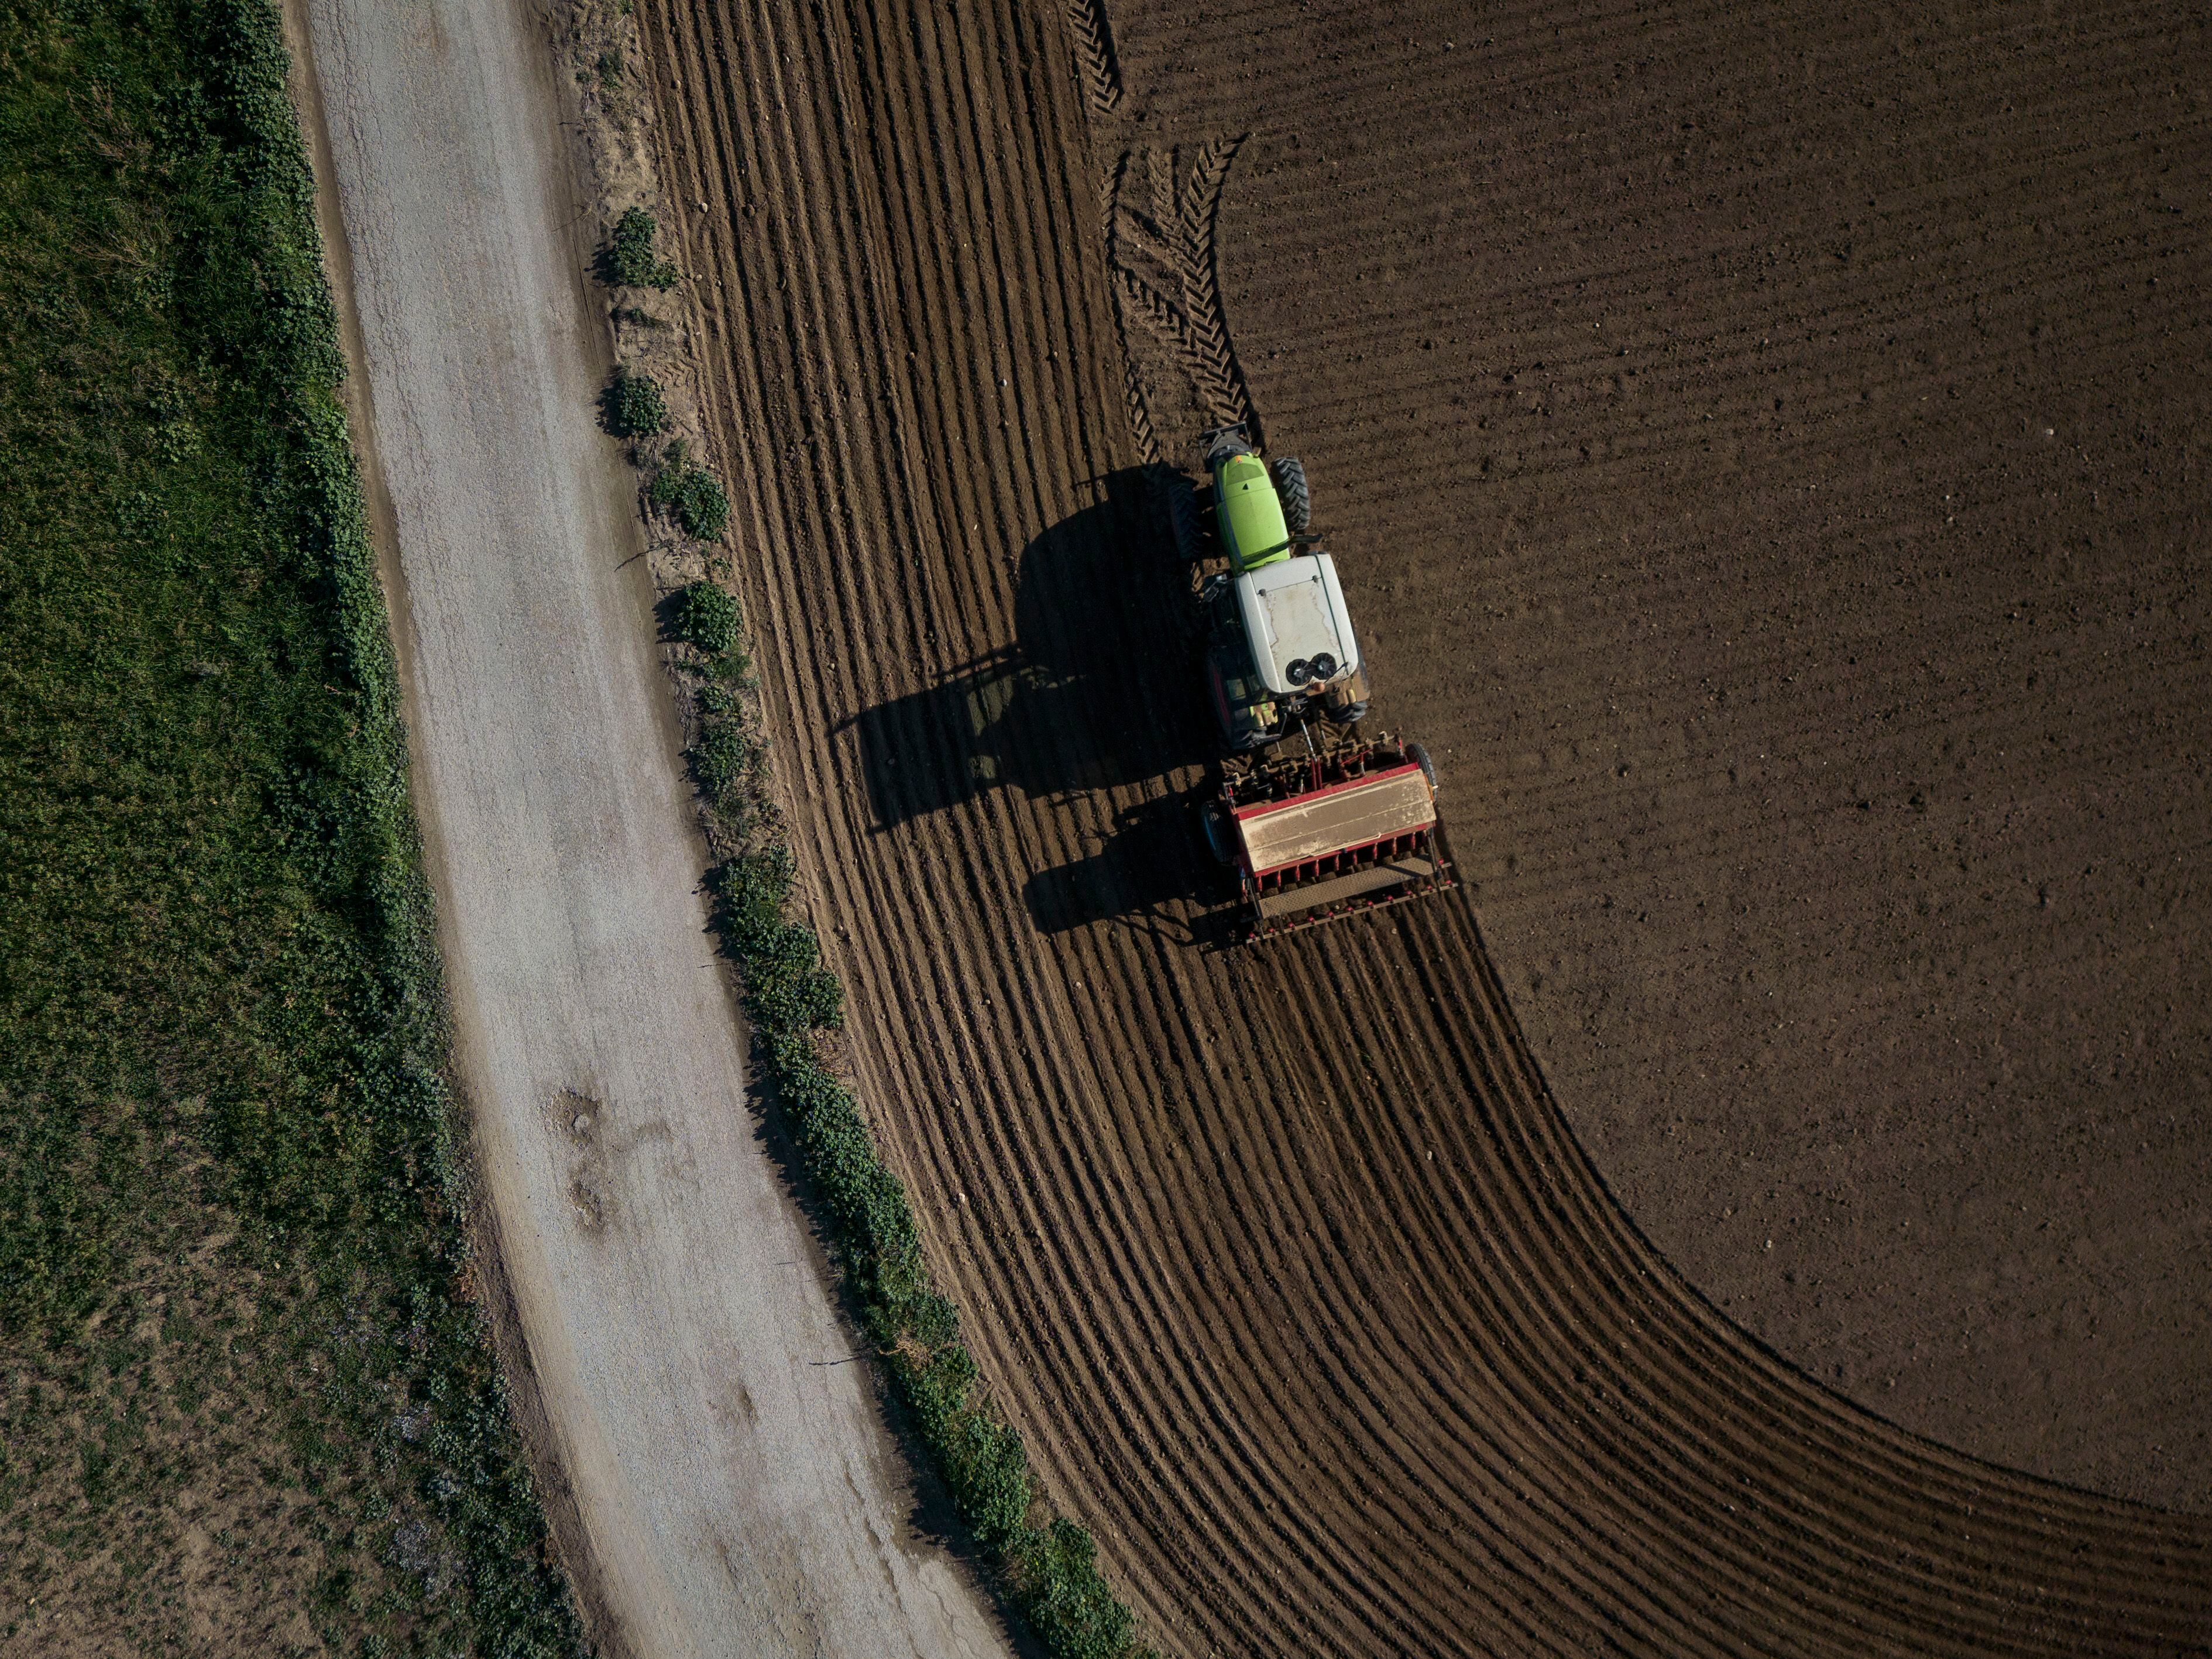 Vista cenital de un agricultor que pasa la sembradora con un tractor en un campo de cultivo de secano.